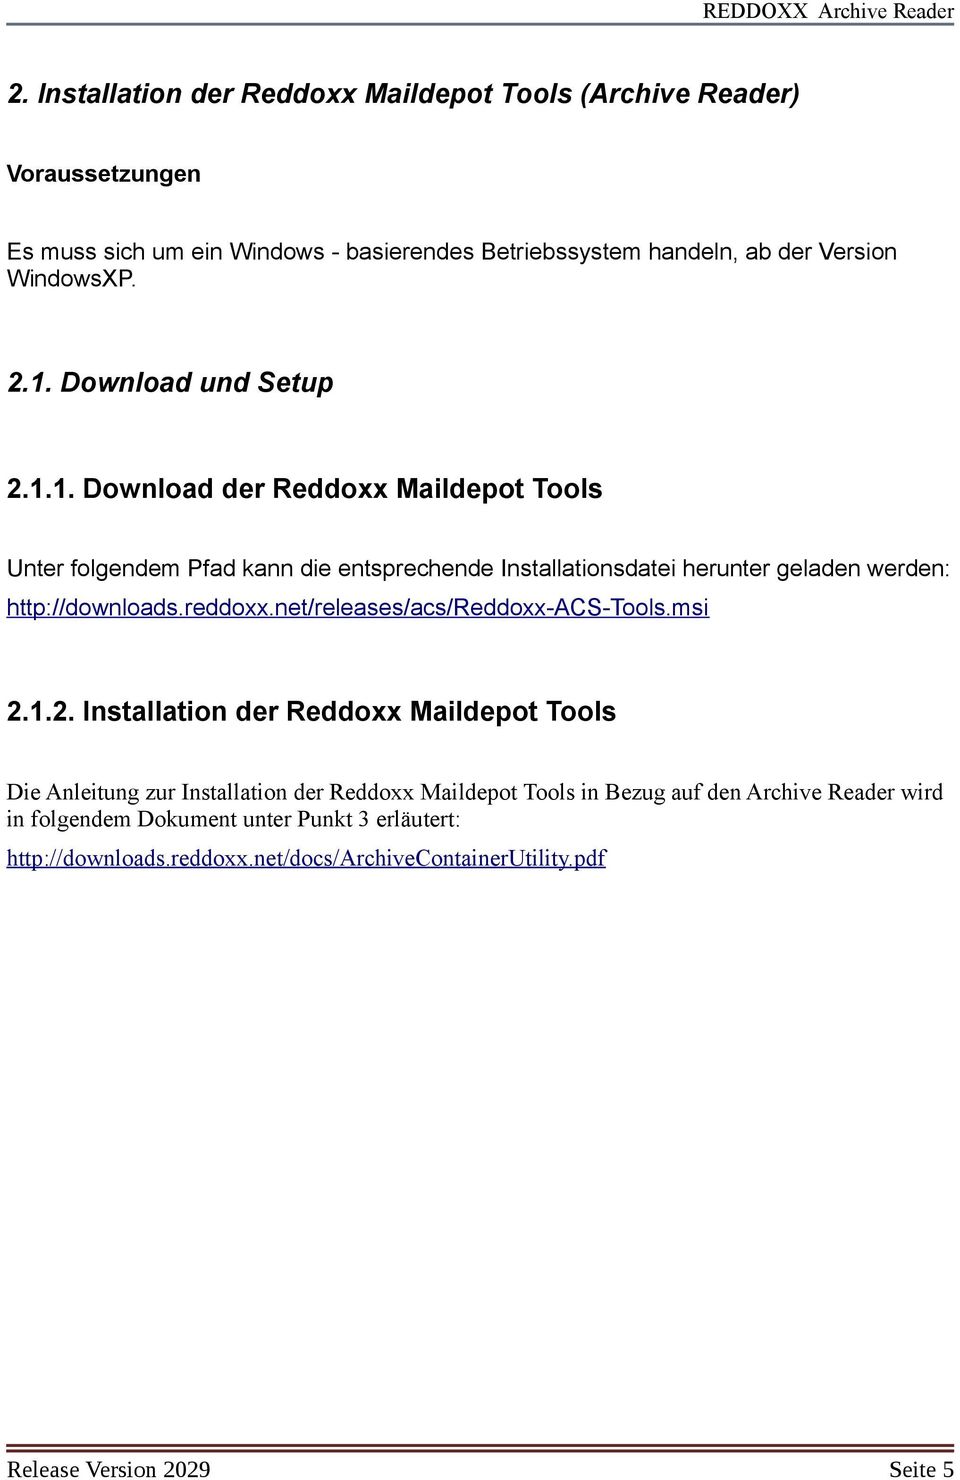 reddoxx.net/releases/acs/reddoxx-acs-tools.msi 2.